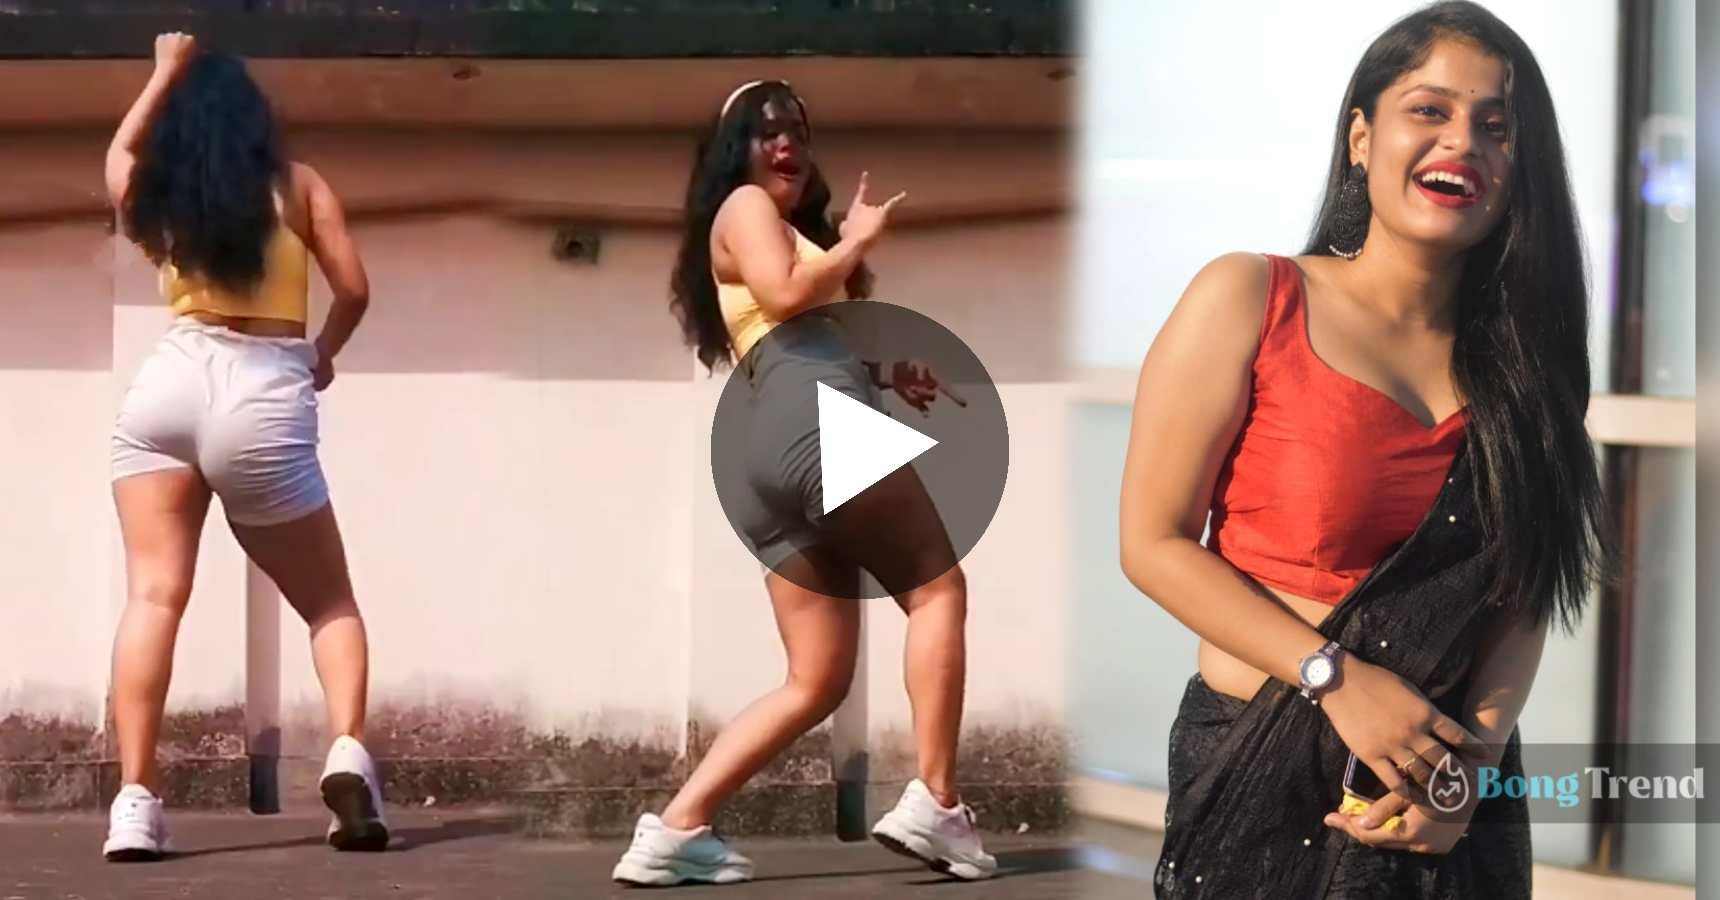 Tithi Basu trolled on social media for Dance video on Kacha Badam song